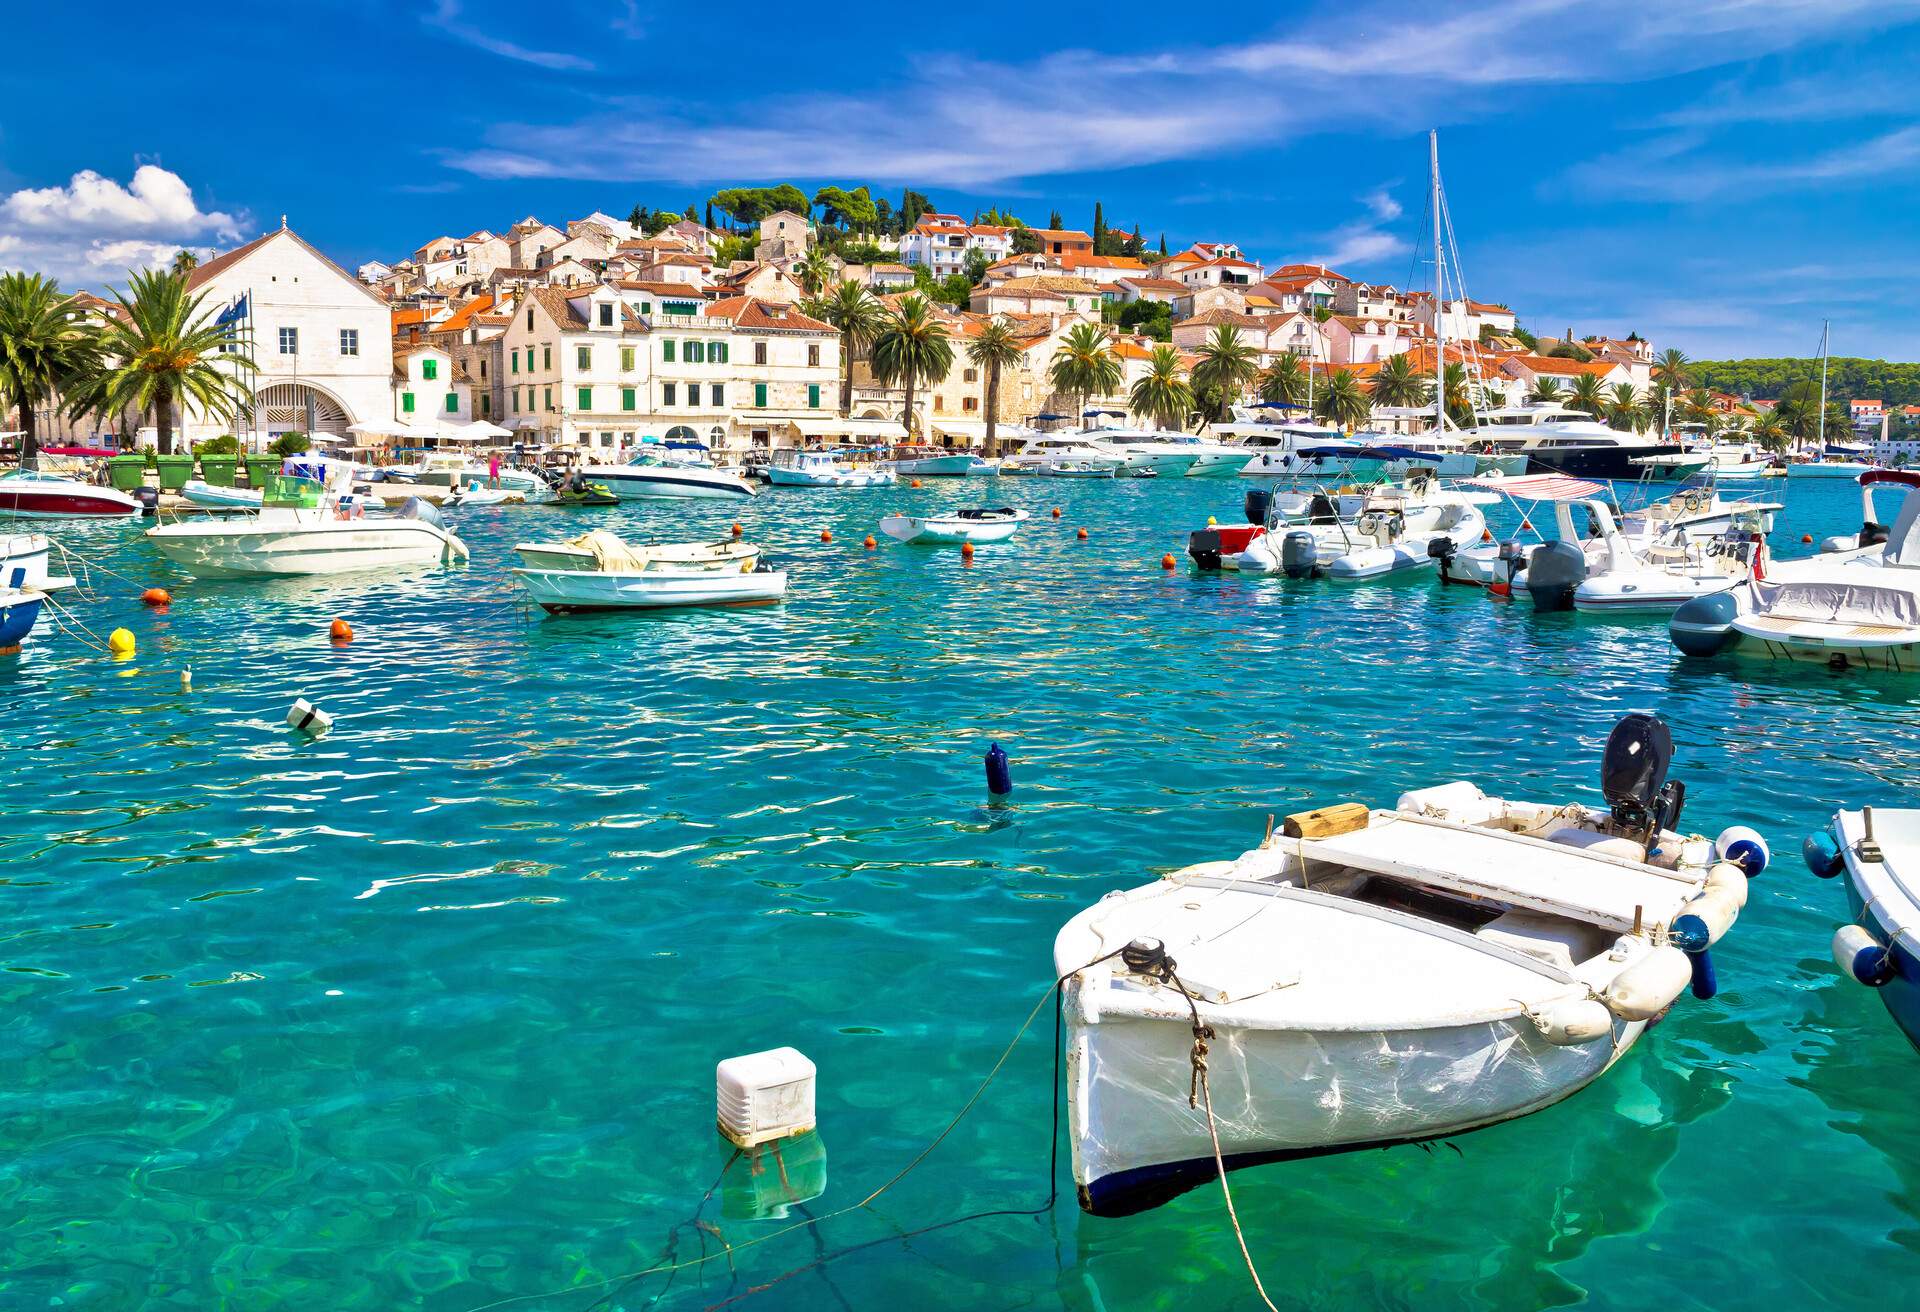 Turquoise waterfront of Hvar island in Dalmatia, Croatia